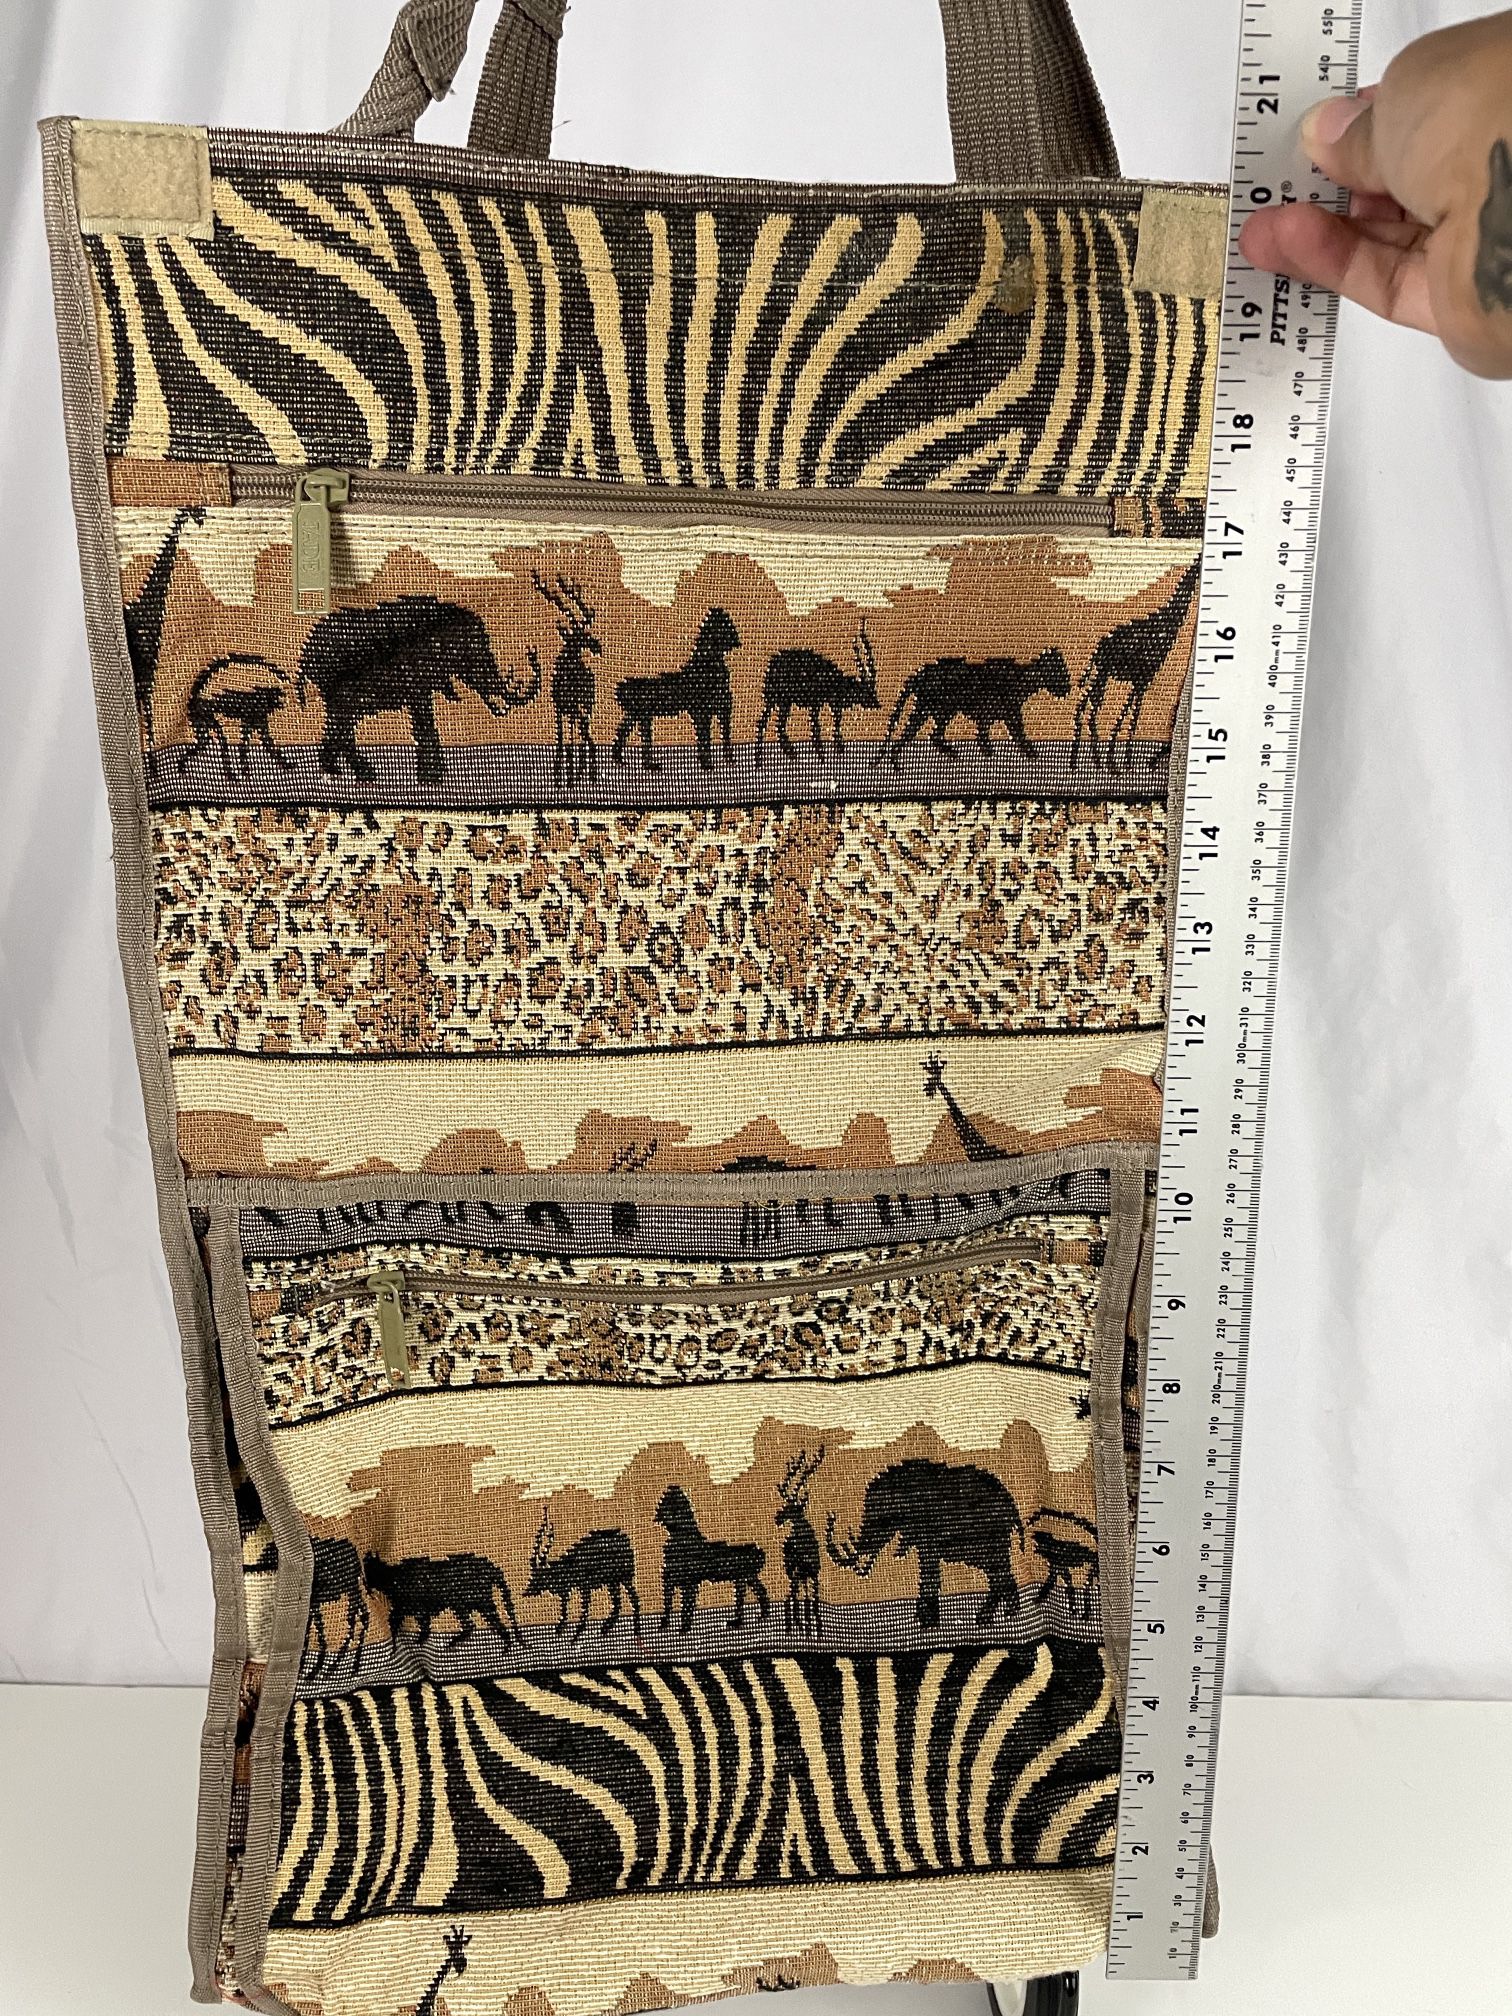 Animal Print African Safari Zebra Foldable Rolling Luggage Carry-on Bag JADE 